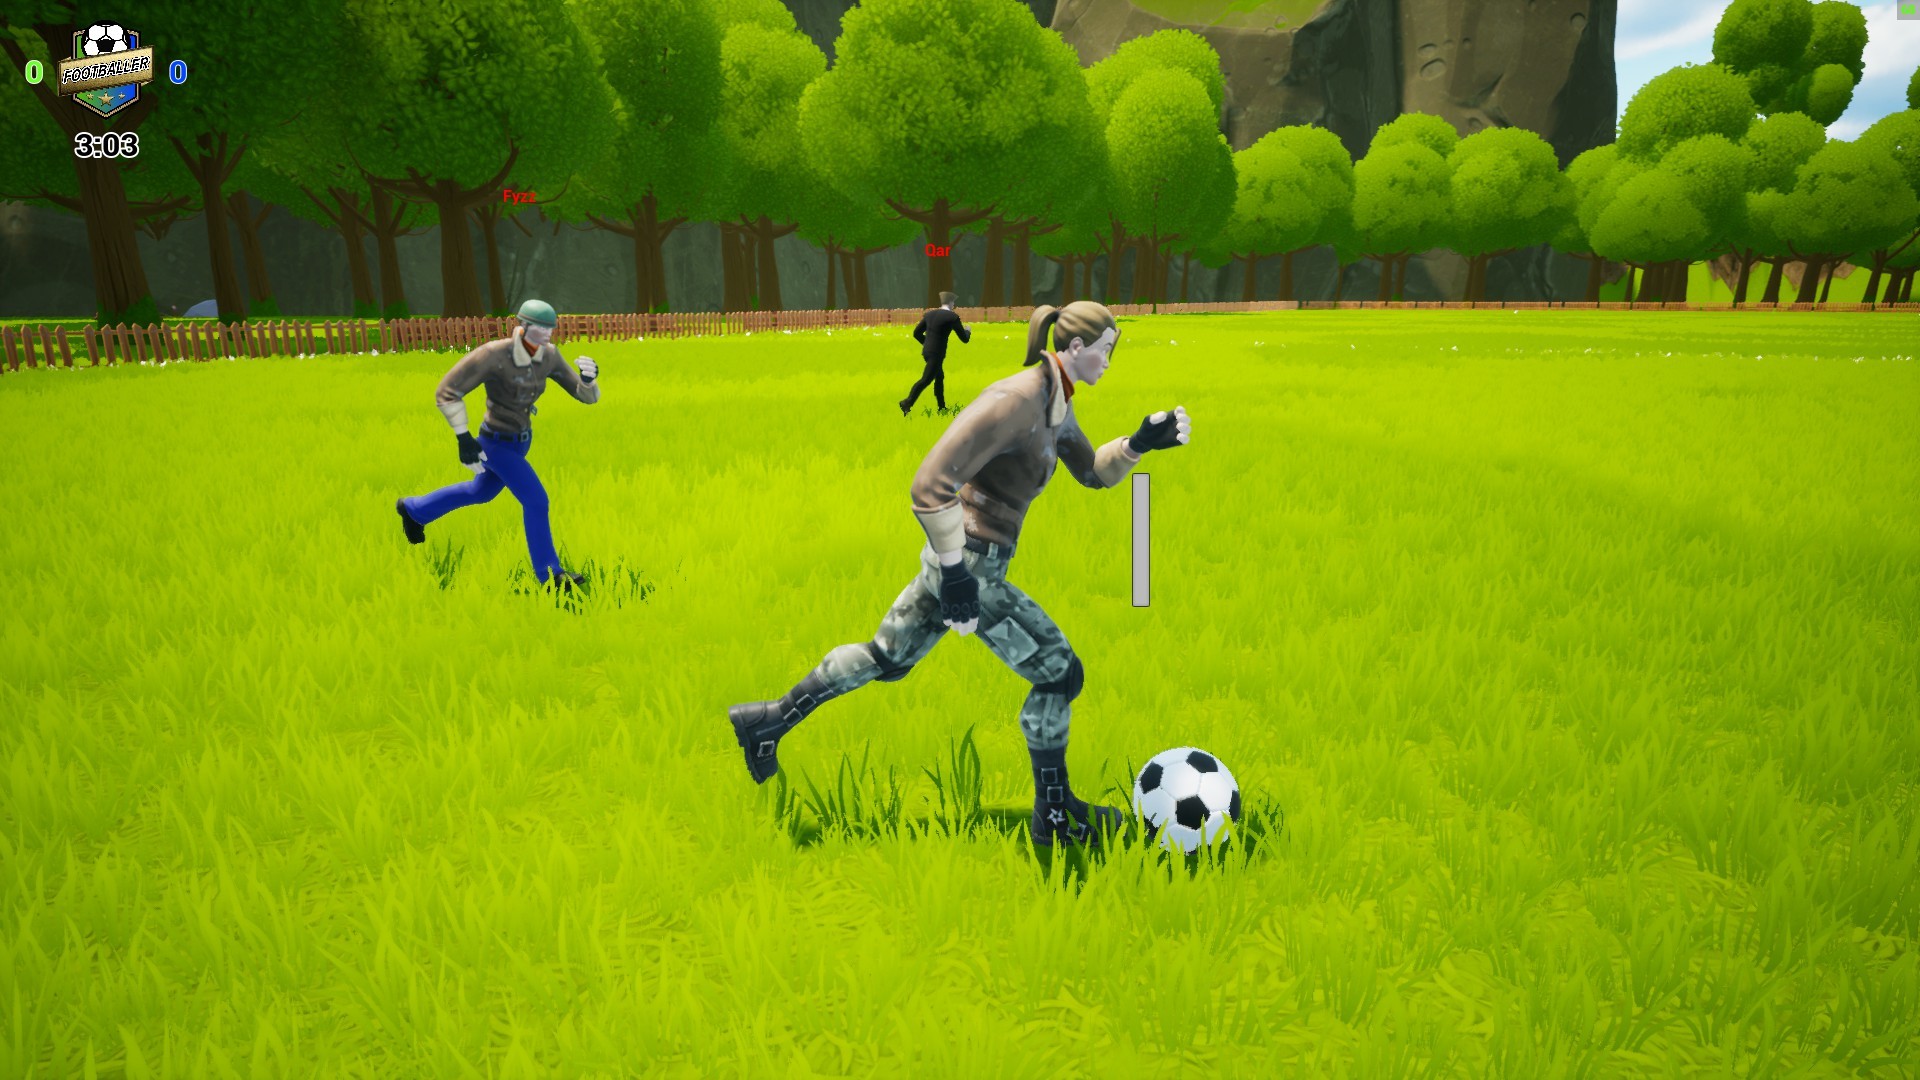 Soccer Hero - 1vs1 Football::Appstore for Android